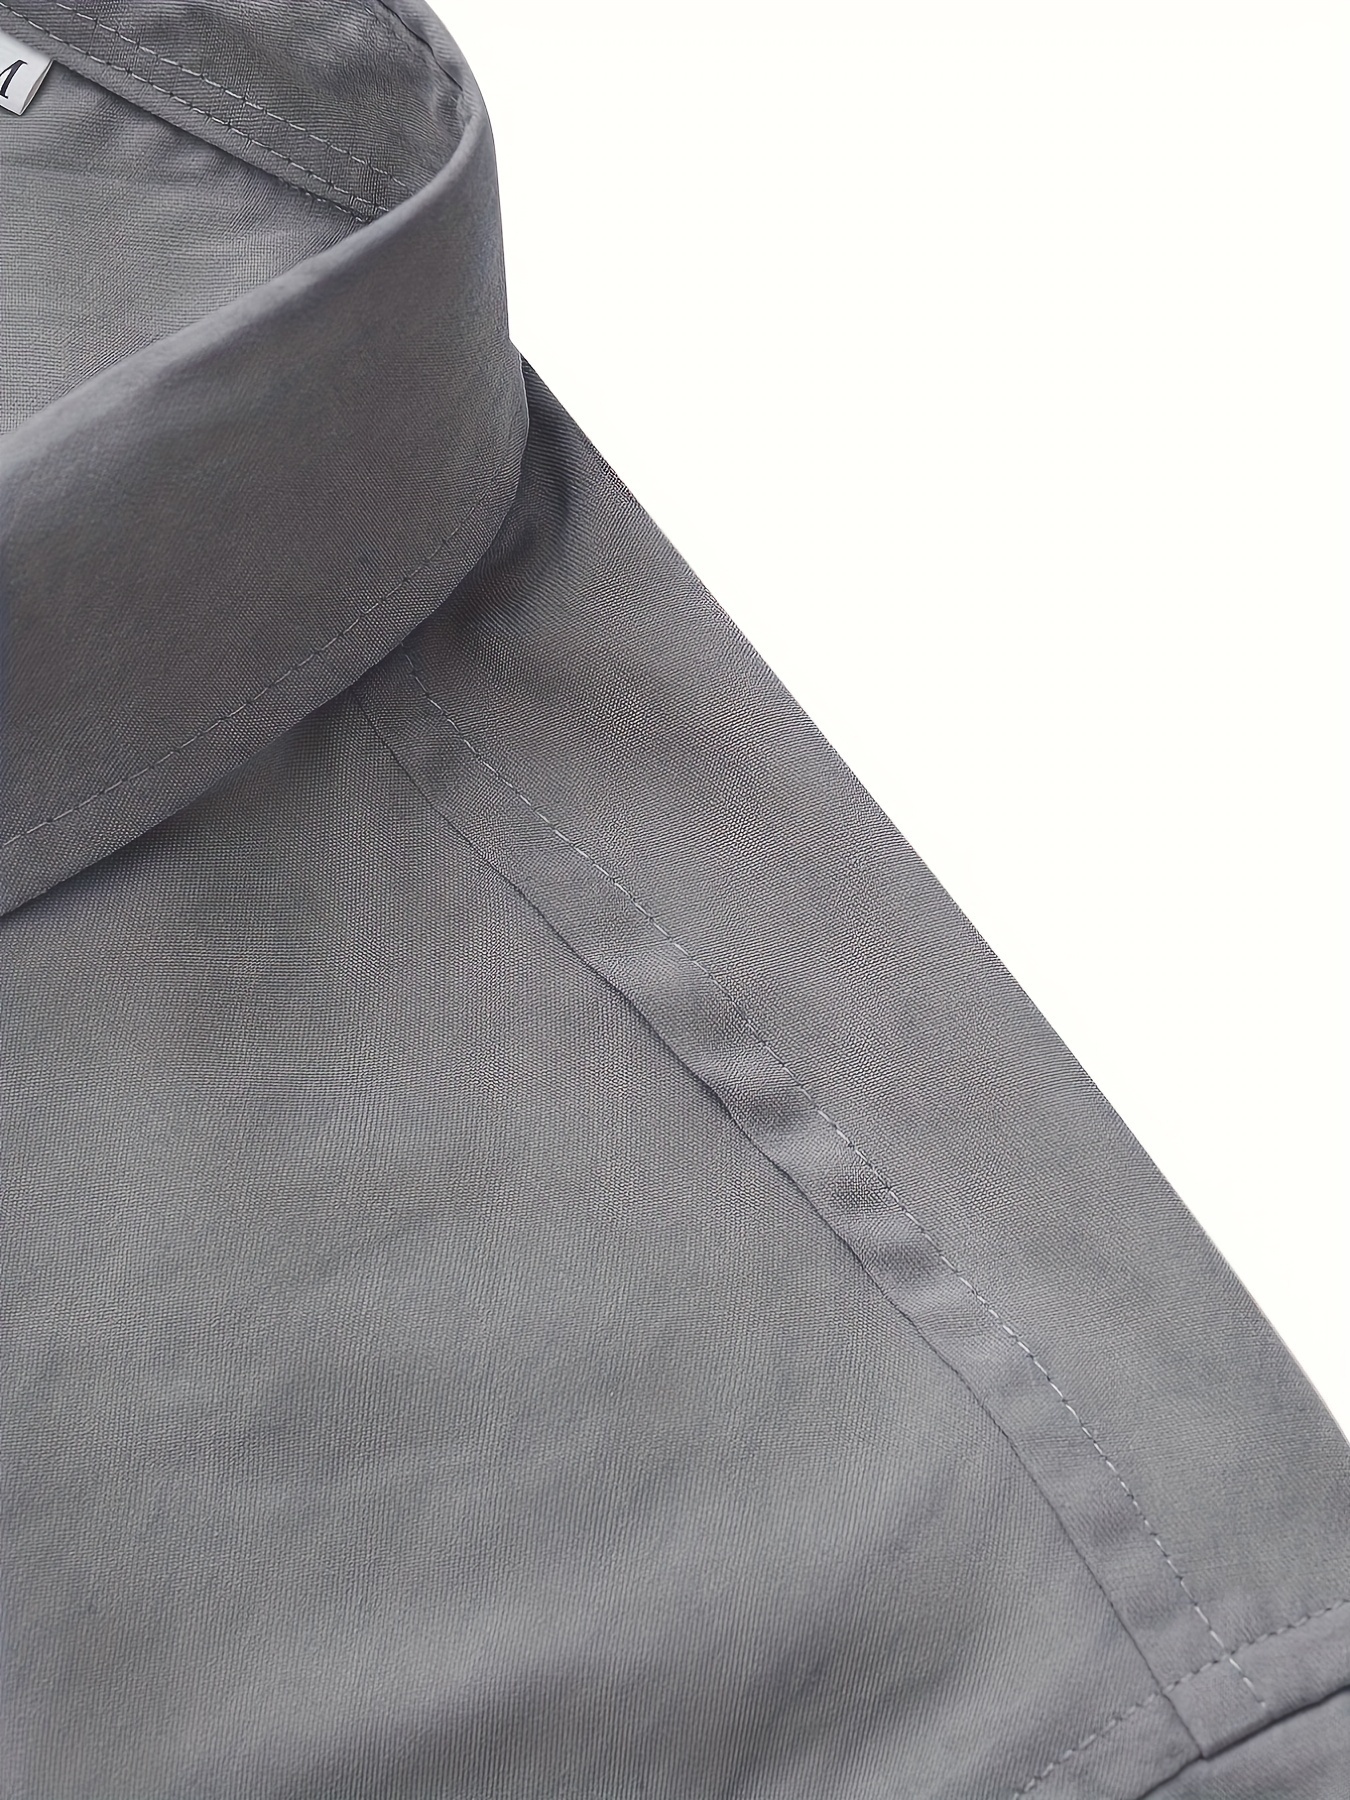 Men Casual Turn-down Collar Short Sleeve Button Closure Shirt Tops Blouse  Save Big SMihono Lapel Tees Shirt for Adult Men Dark Gray 10